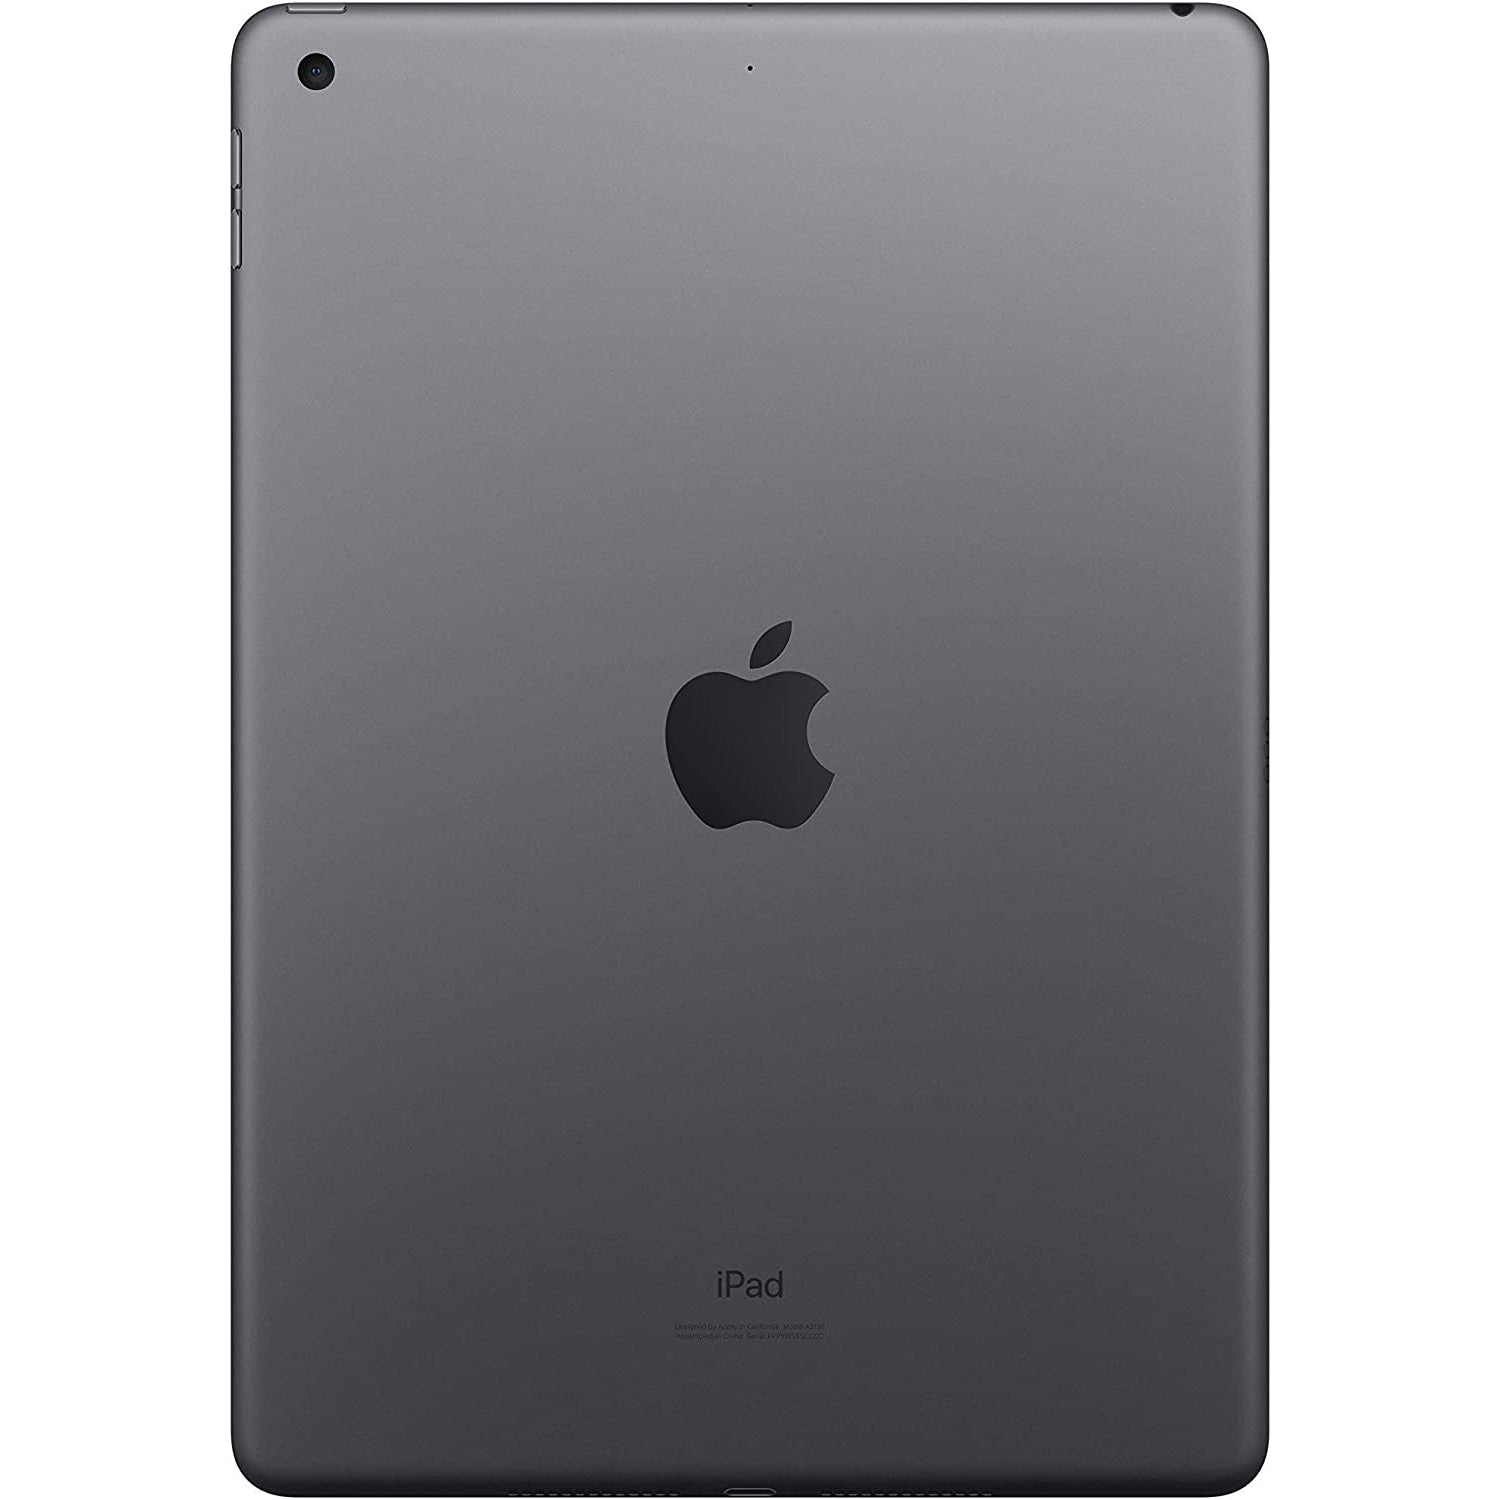 Apple iPad 7th Gen, 10.2" Wi-Fi Tablet - MW742LL/A - Space Grey - Refurbished Fair